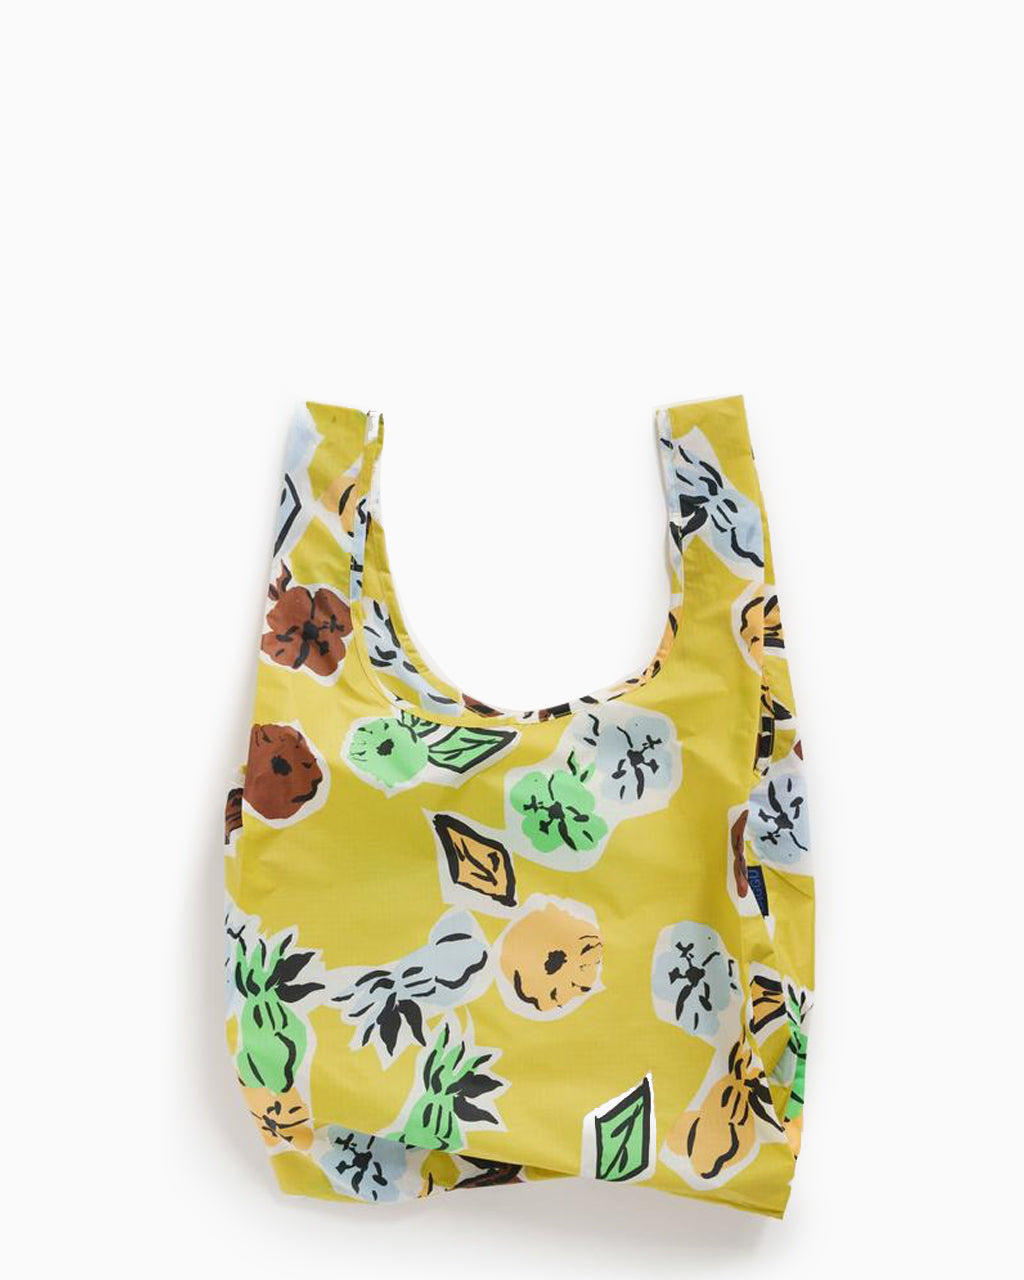 New: Banana Bag Small Zipper Pouch - Lazy Girl Designs